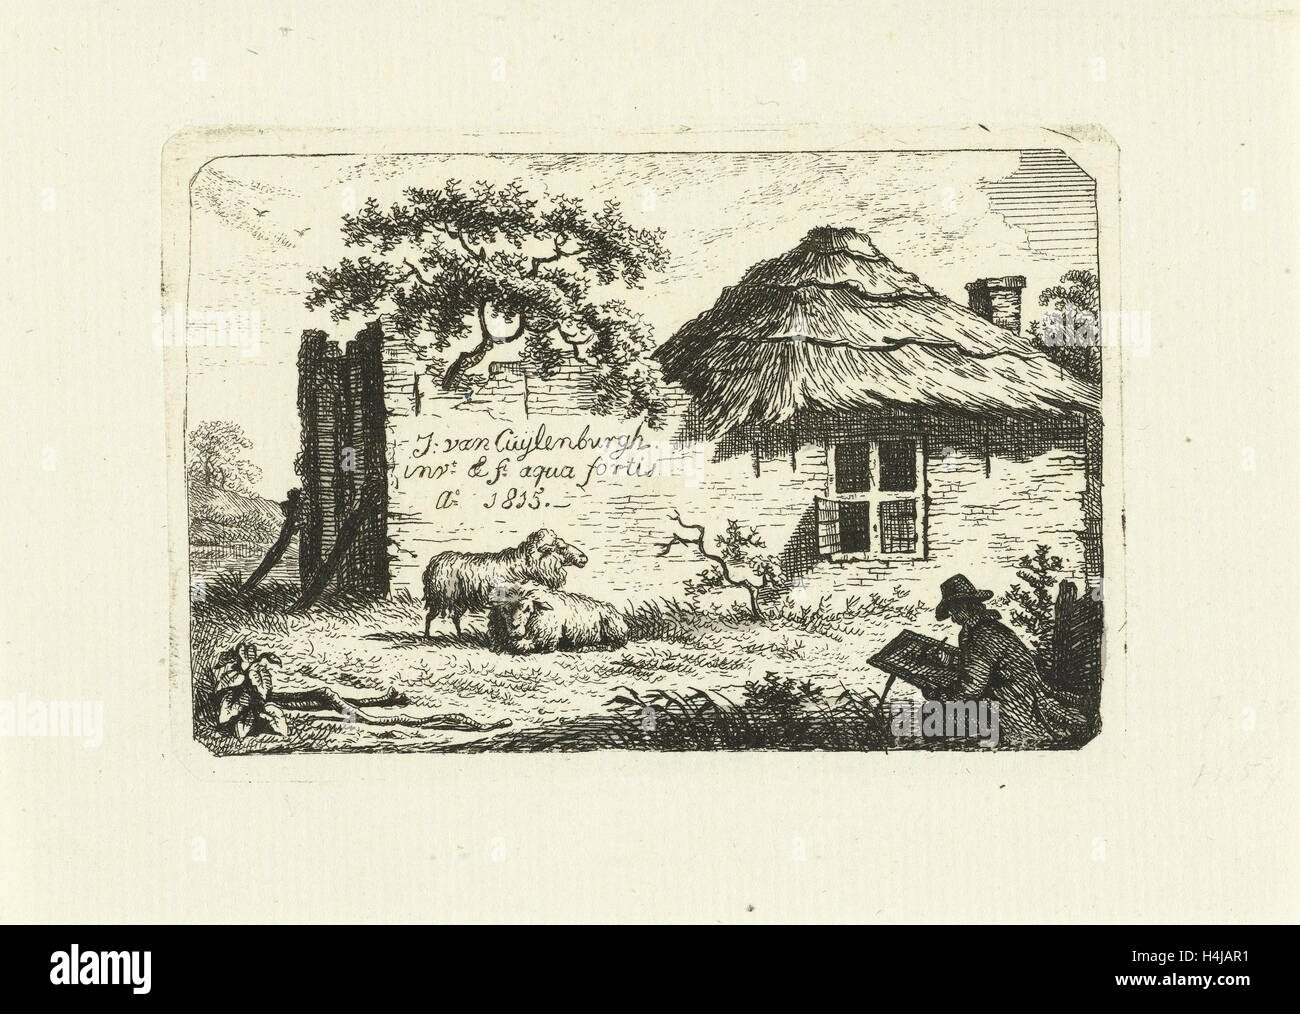 Artista al fatiscente casa colonica con due pecore, Johannes van Cuylenburgh, 1815 Foto Stock